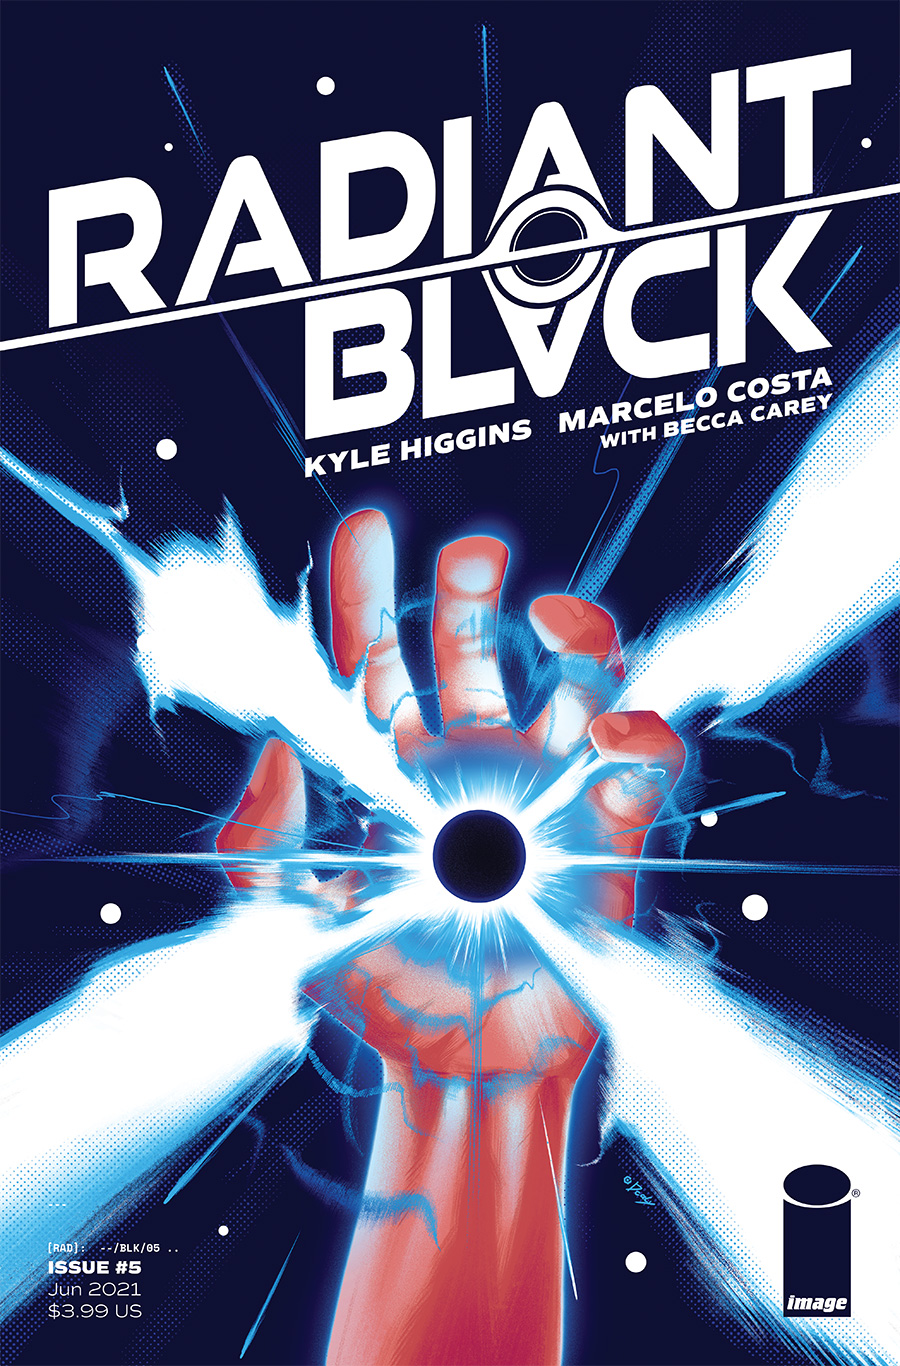 Radiant-black-5-comic-cover-art-doaly